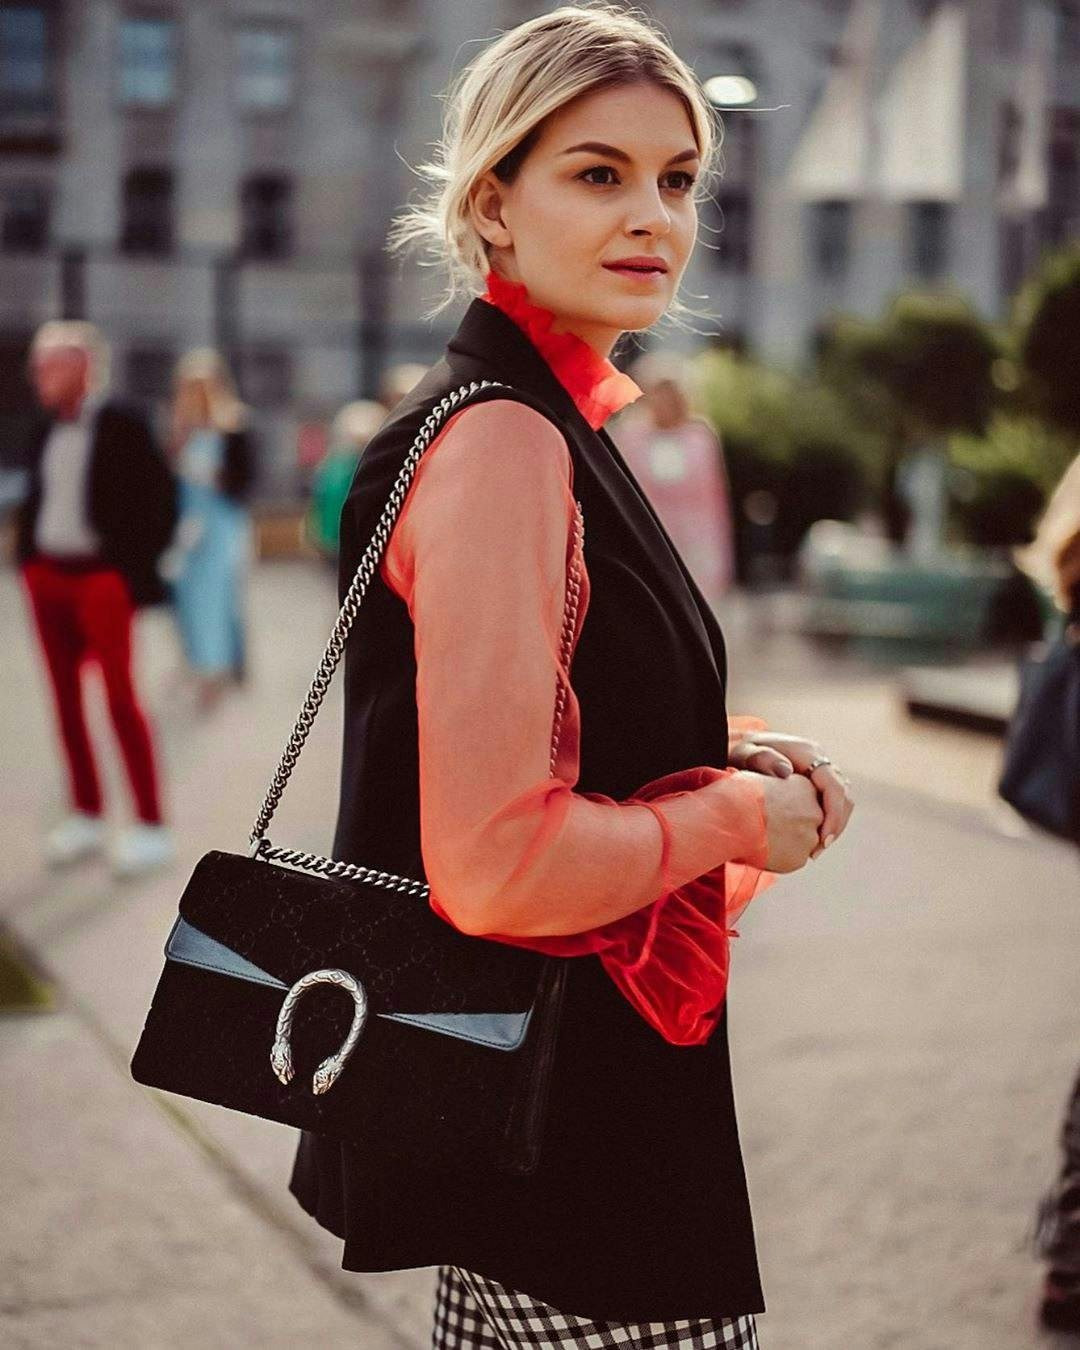 person human handbag bag accessories accessory clothing apparel purse